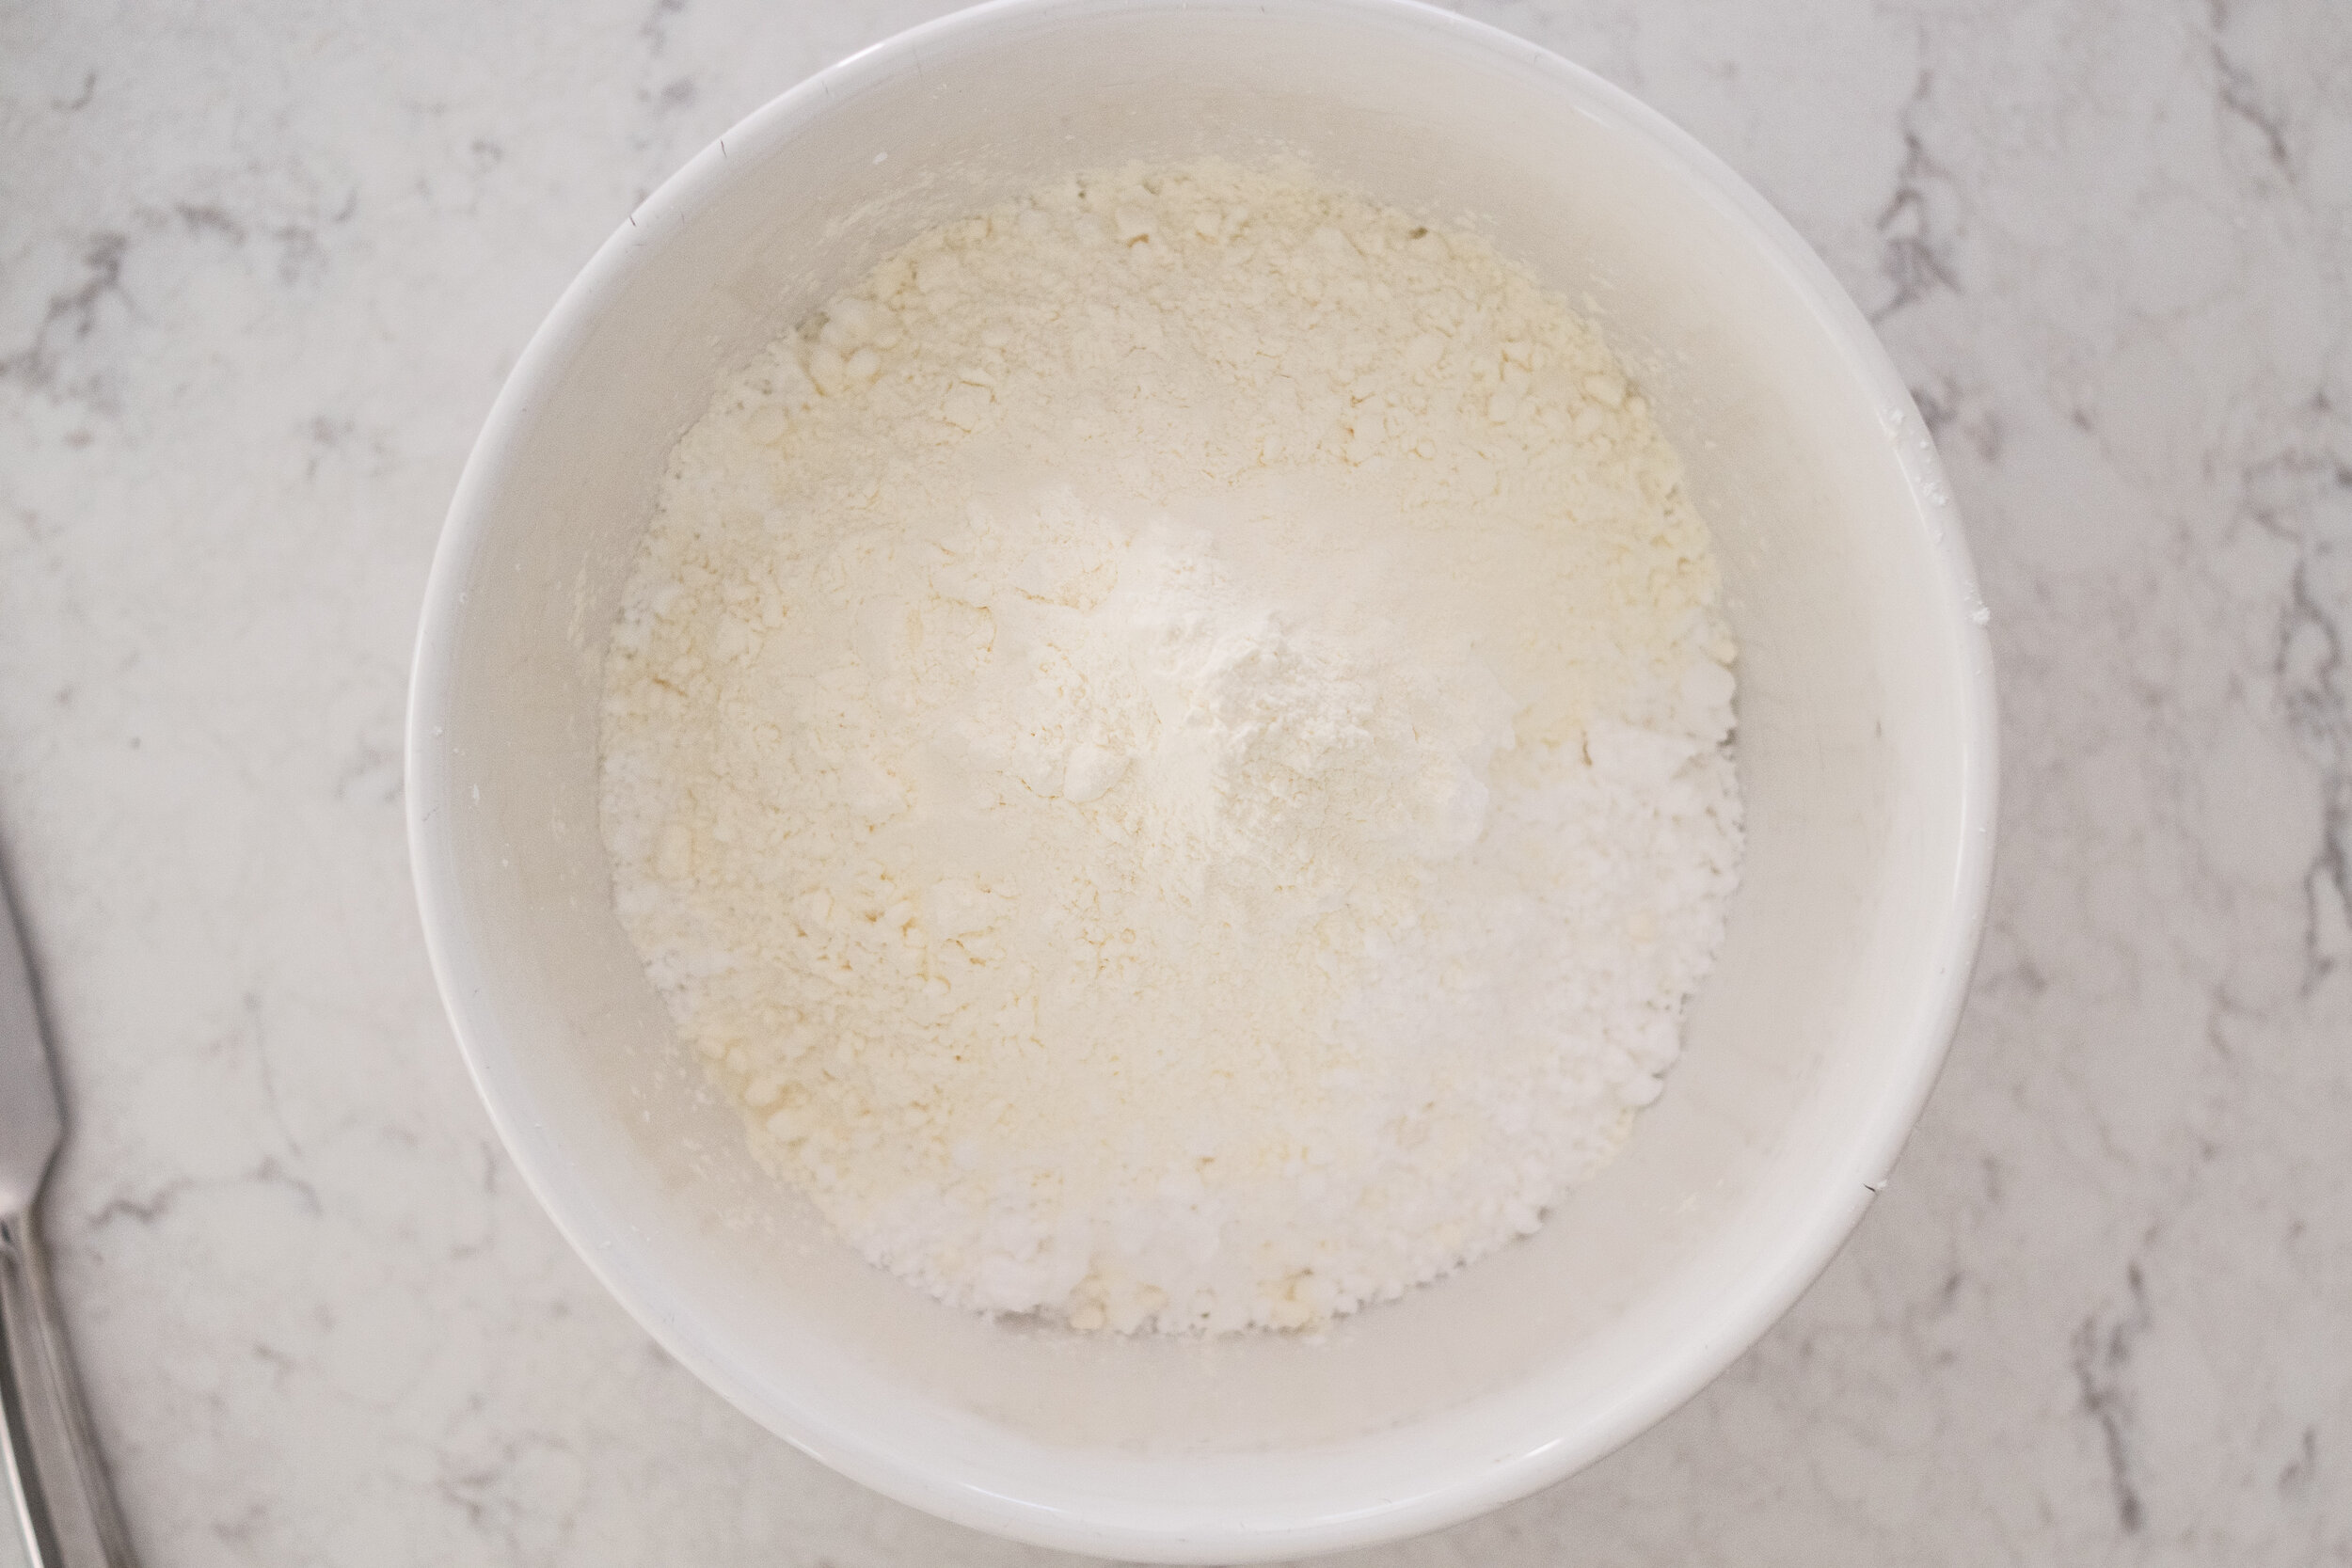  Add meringue powdered to powdered sugar. 